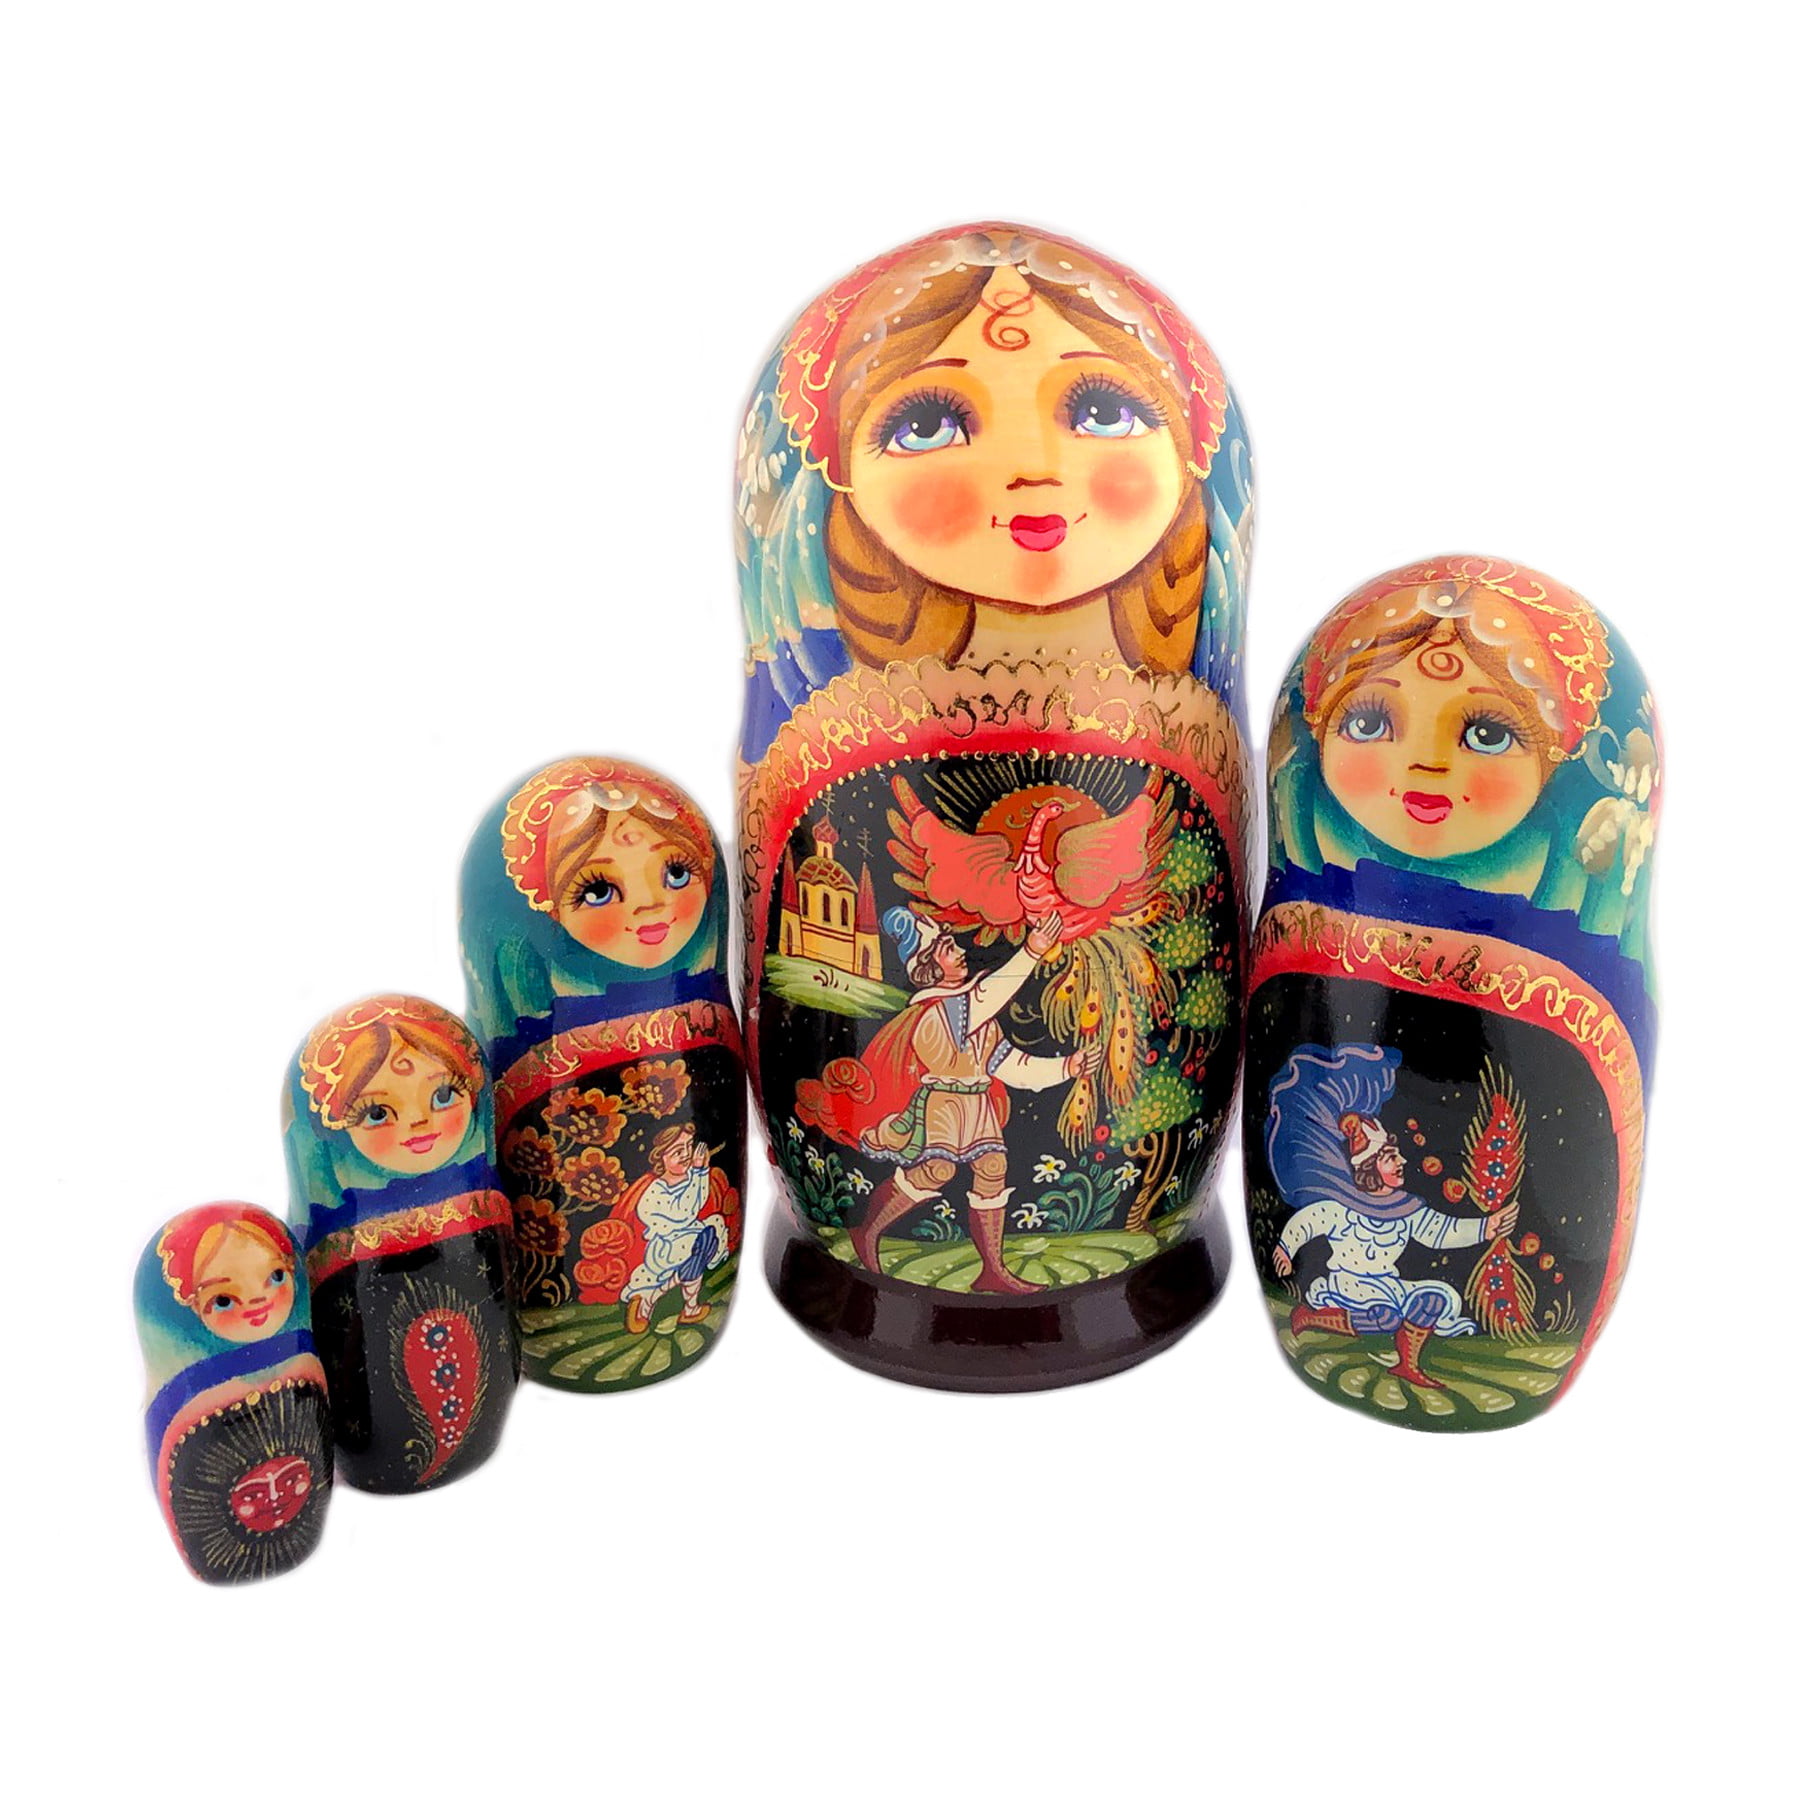 Wizard Of Oz Russian Nesting Doll 5-Piece Babushka Stacking Set 4 inches tall 